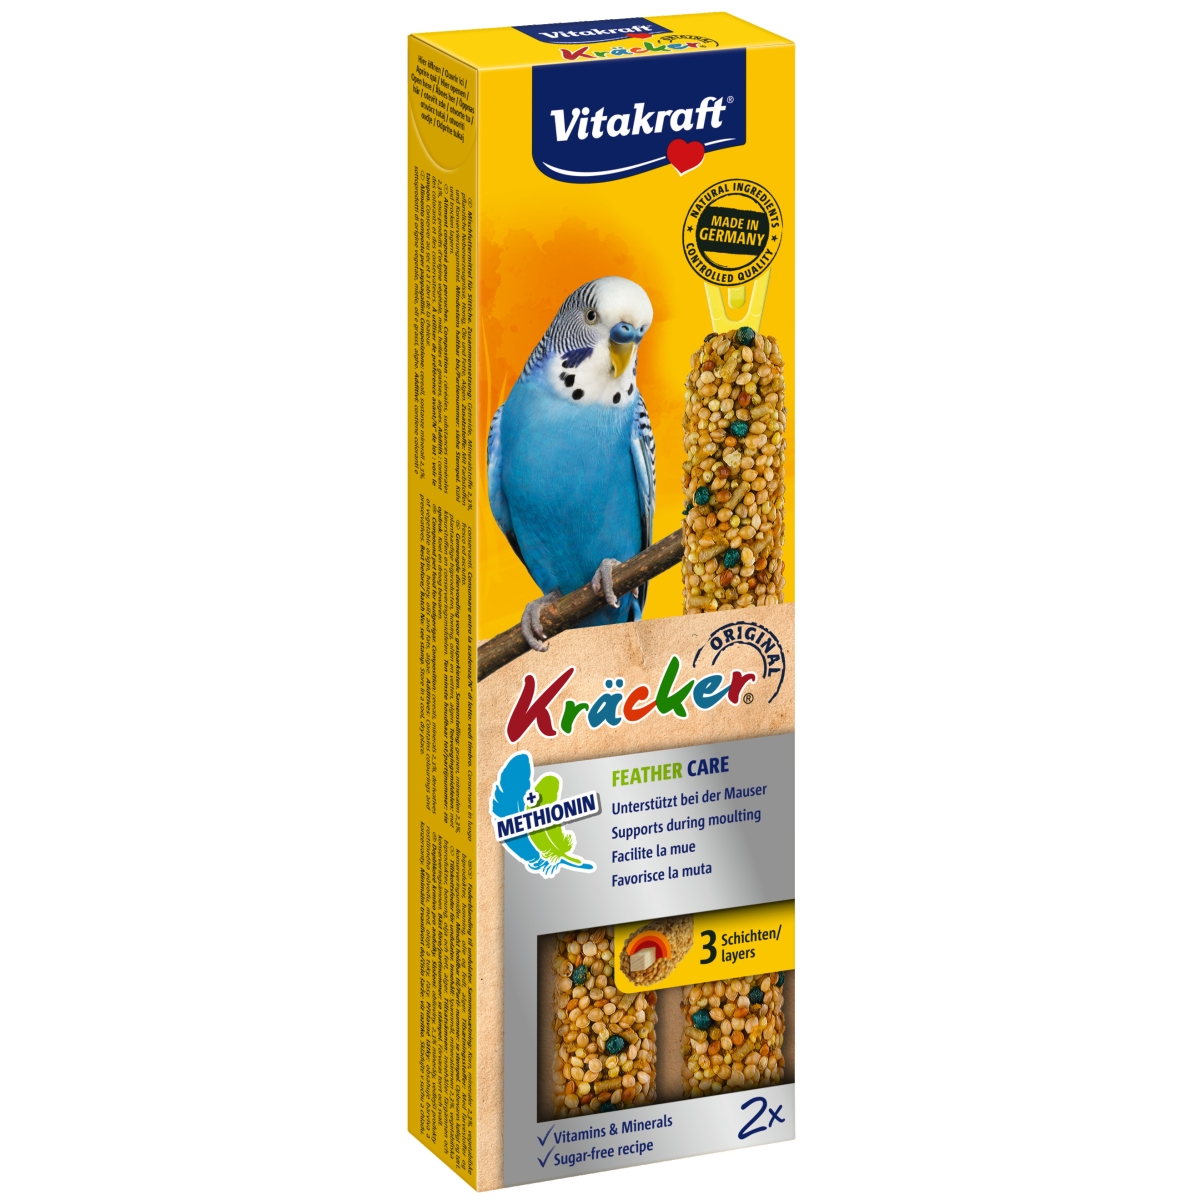 Vitakraft Kräcker Feather Care лакомство для волнистых попугаев, 2 шт